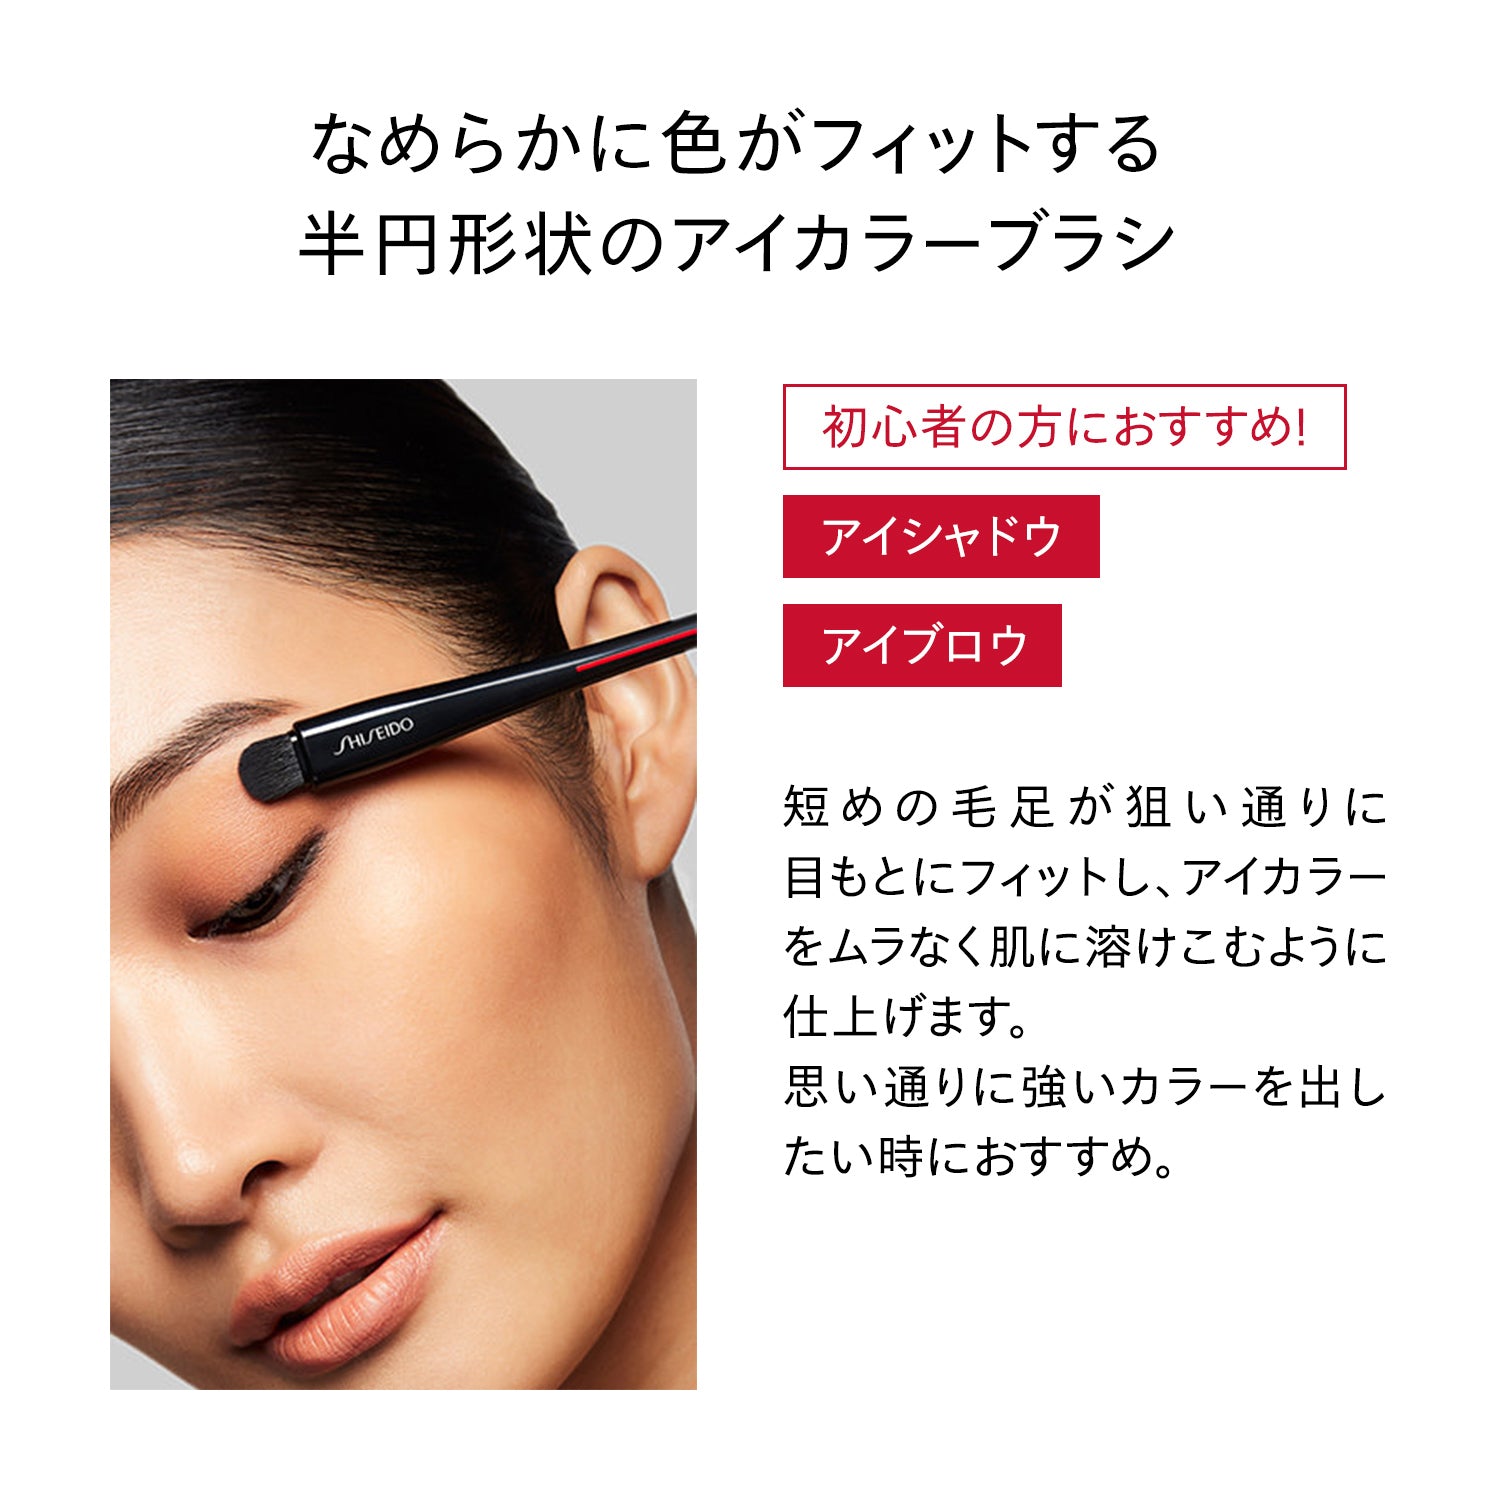 SHISEIDO Makeup HANEN FUDE Eye Shading Brush